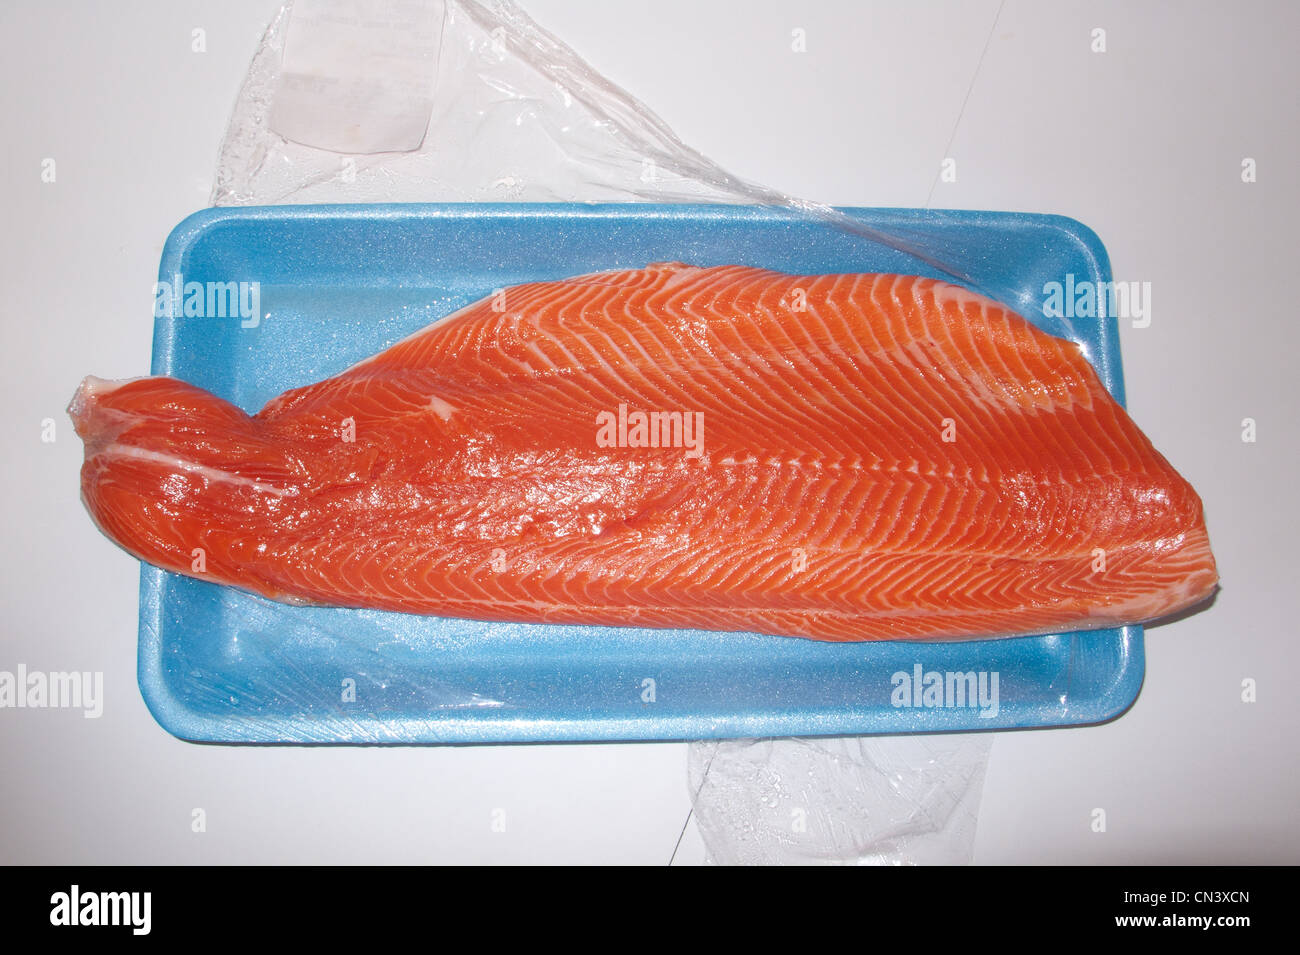 Salmon fillet on food tray Stock Photo